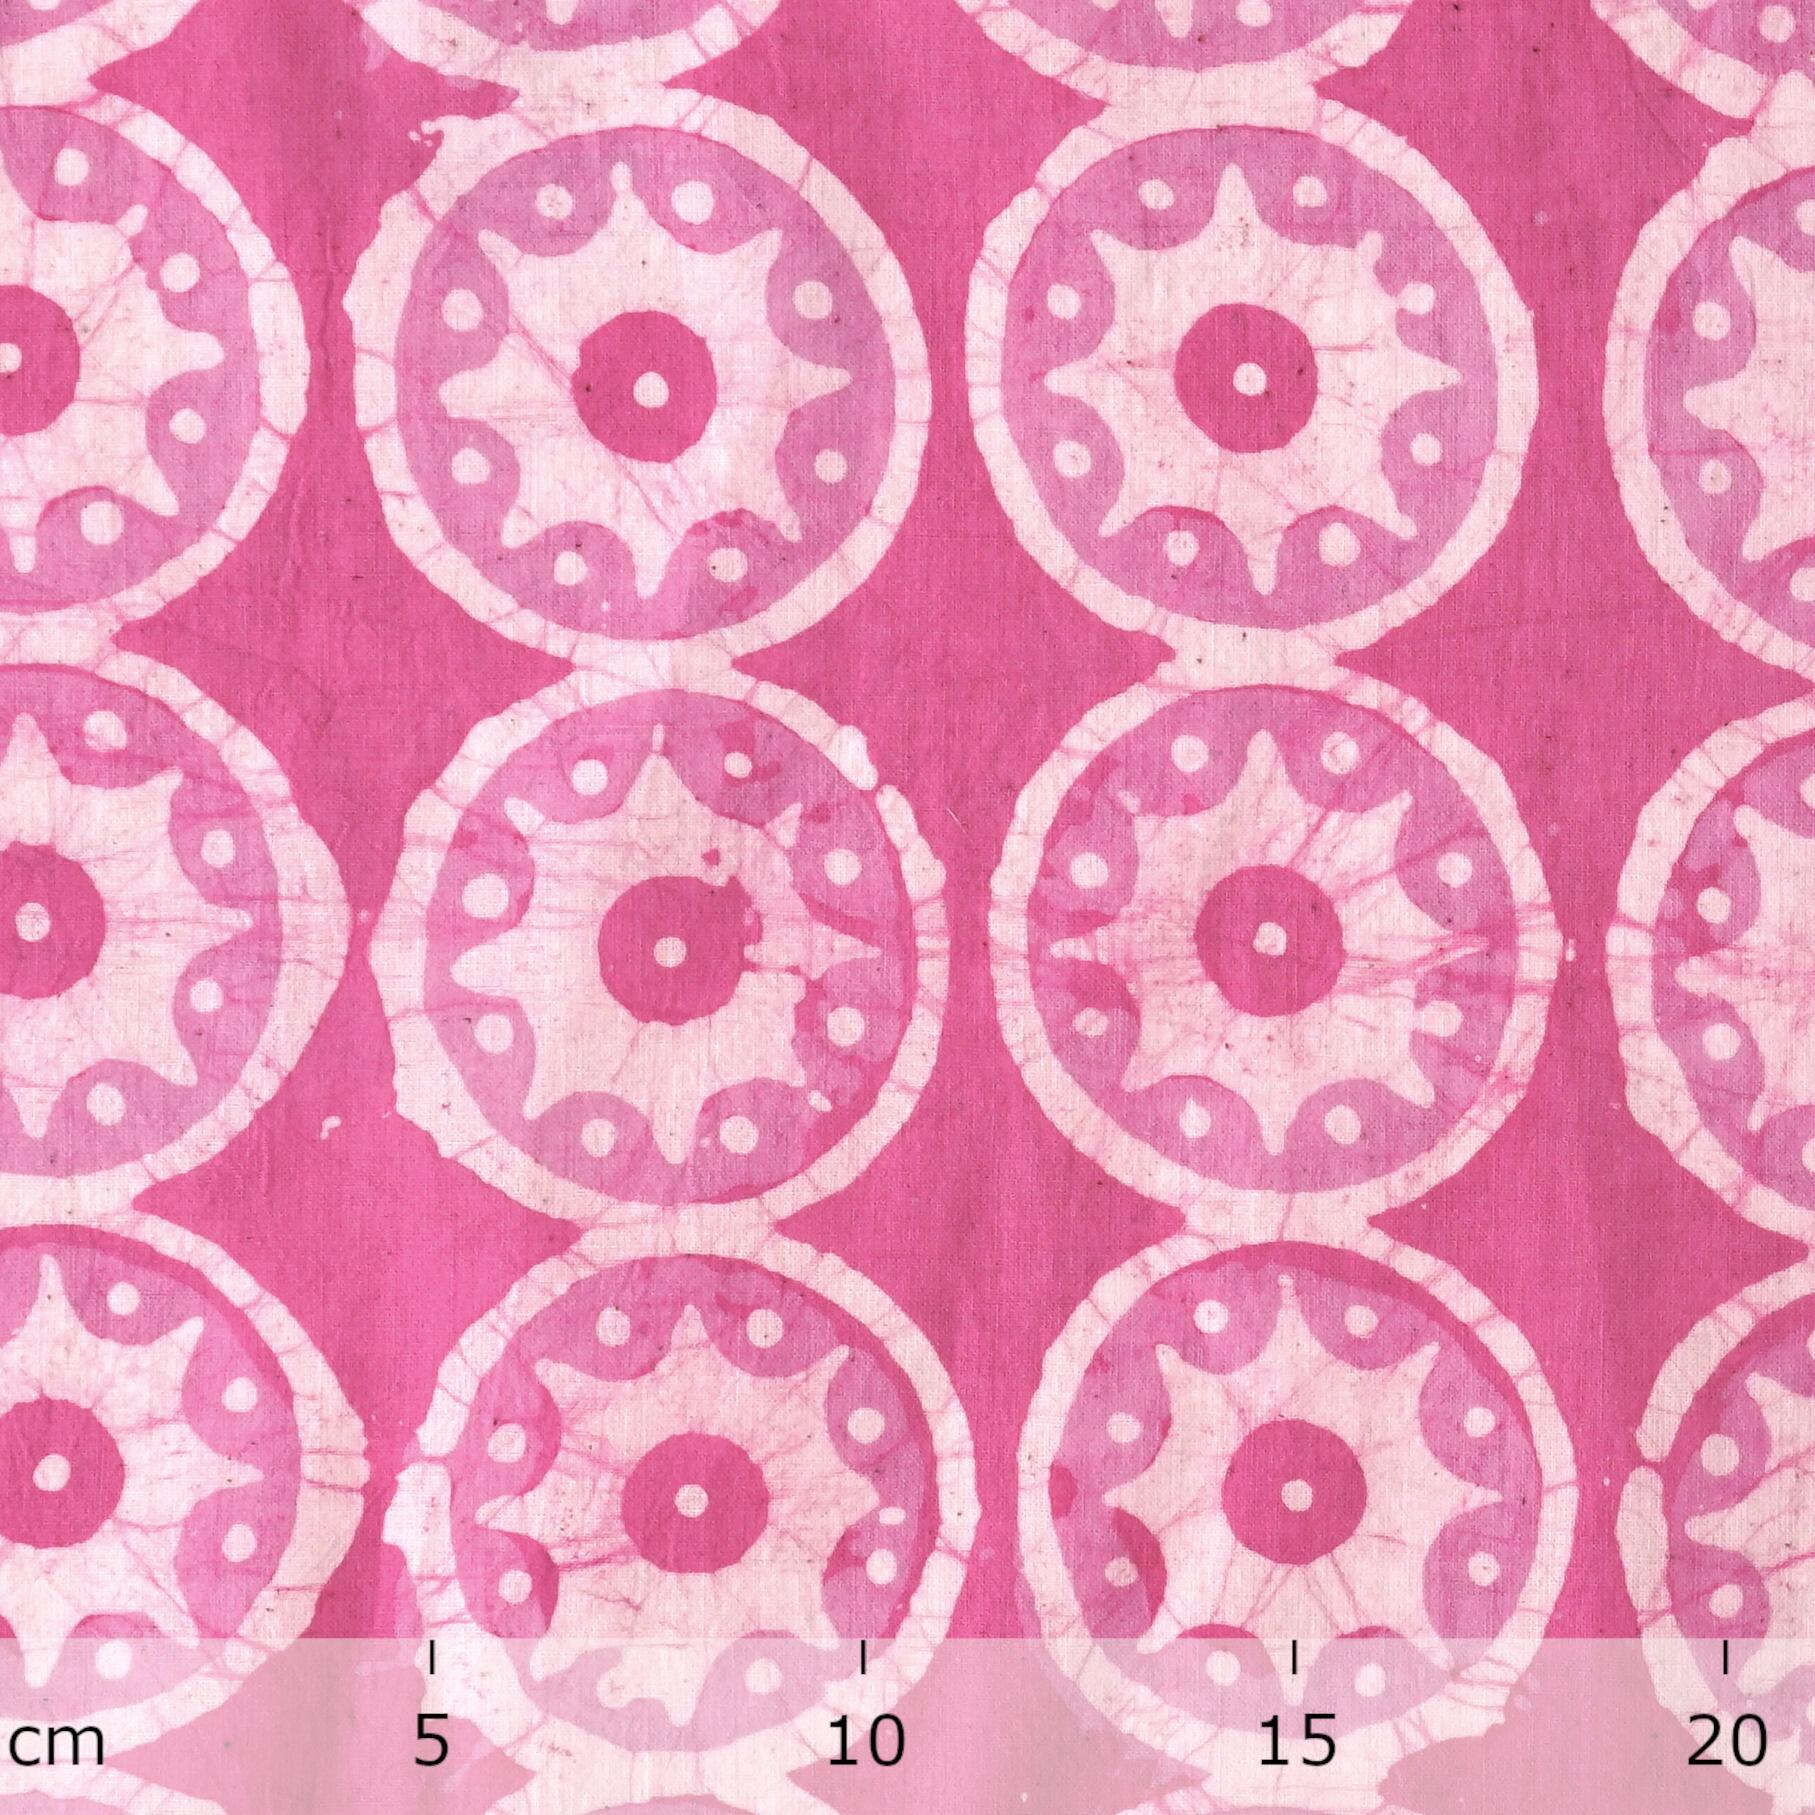 100% Block-Printed Batik Cotton Fabric From India - Pink Reactive Dye - Lollipop - Ruler